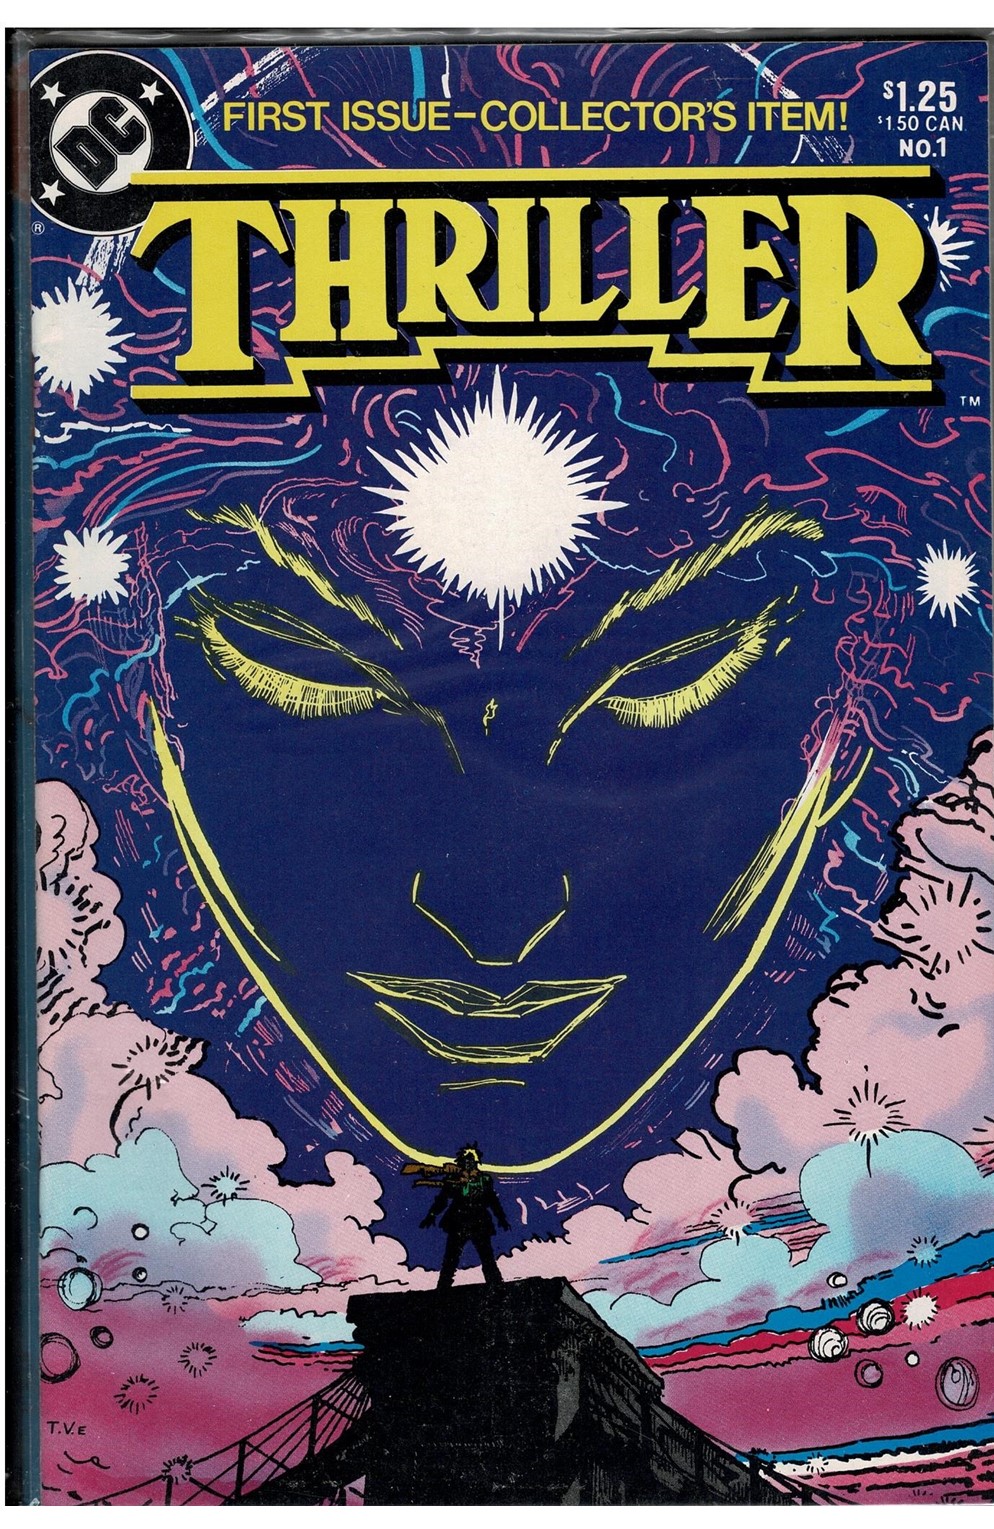 Thriller #1-5 Comic Pack